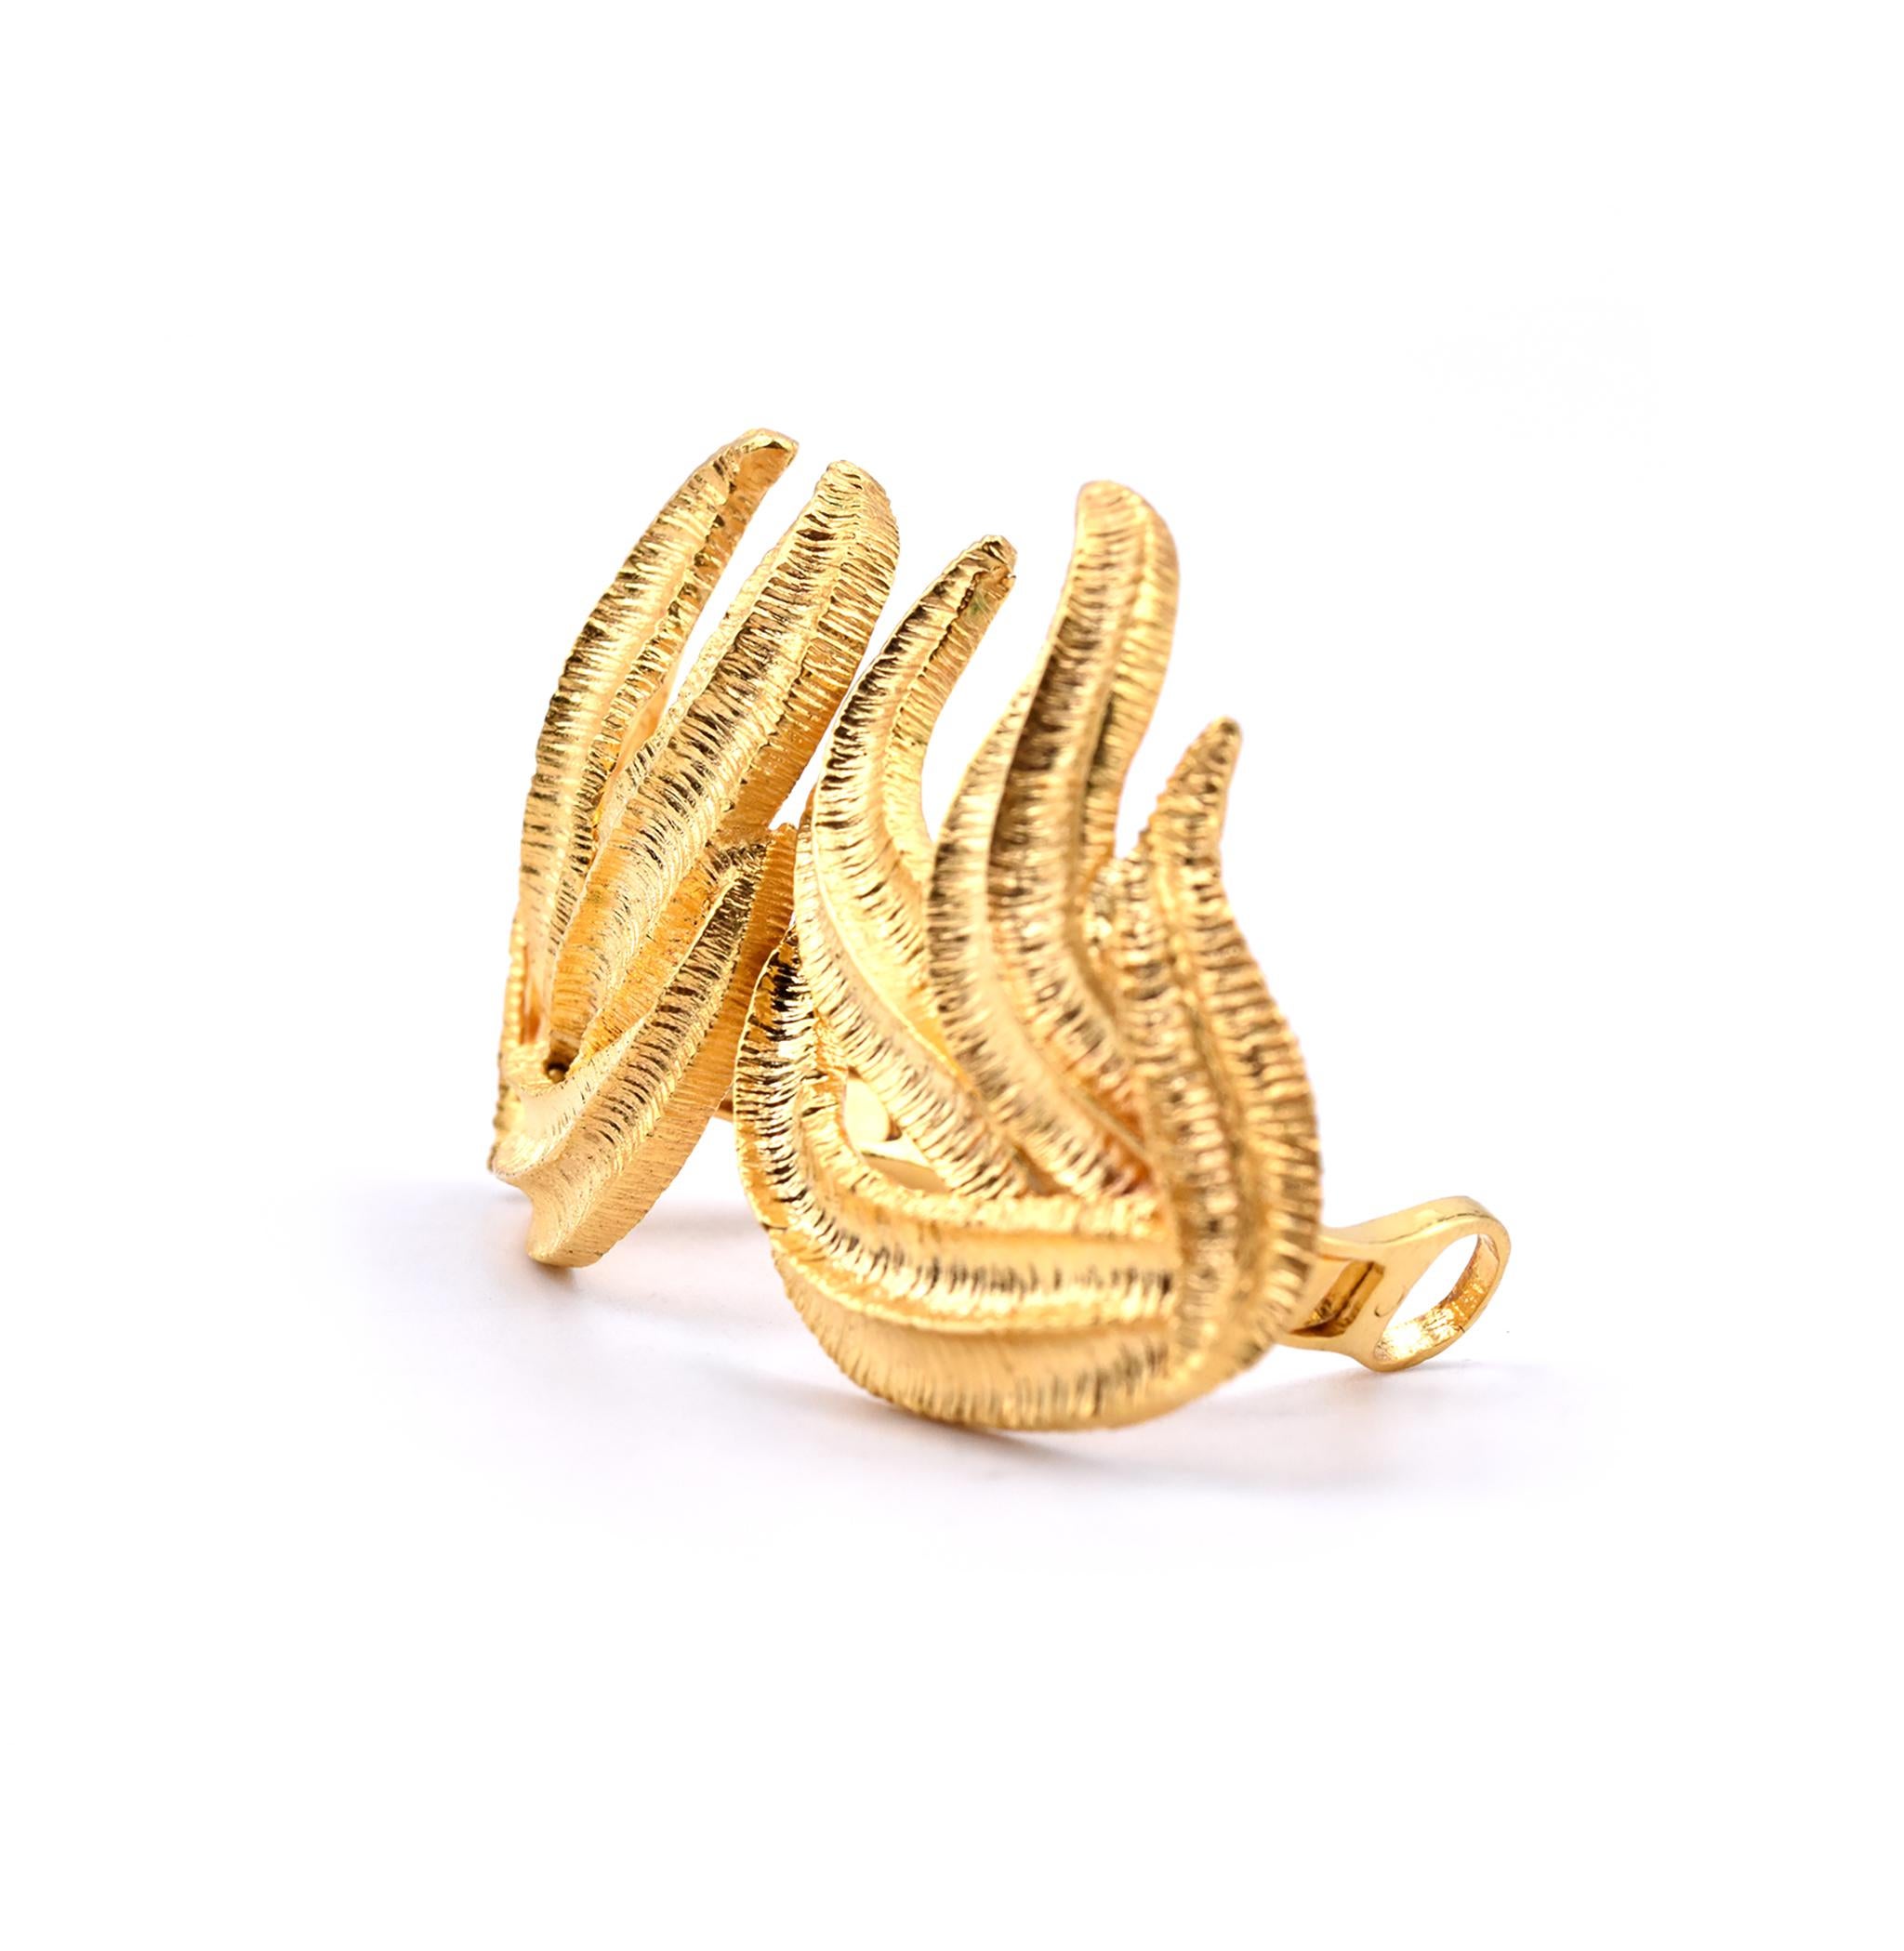 Designer: custom
Material: 18k yellow gold
Dimensions: earrings measure 36 X 30mm 
Fastenings: non-pierced omega backs
Weight: 24.14 grams